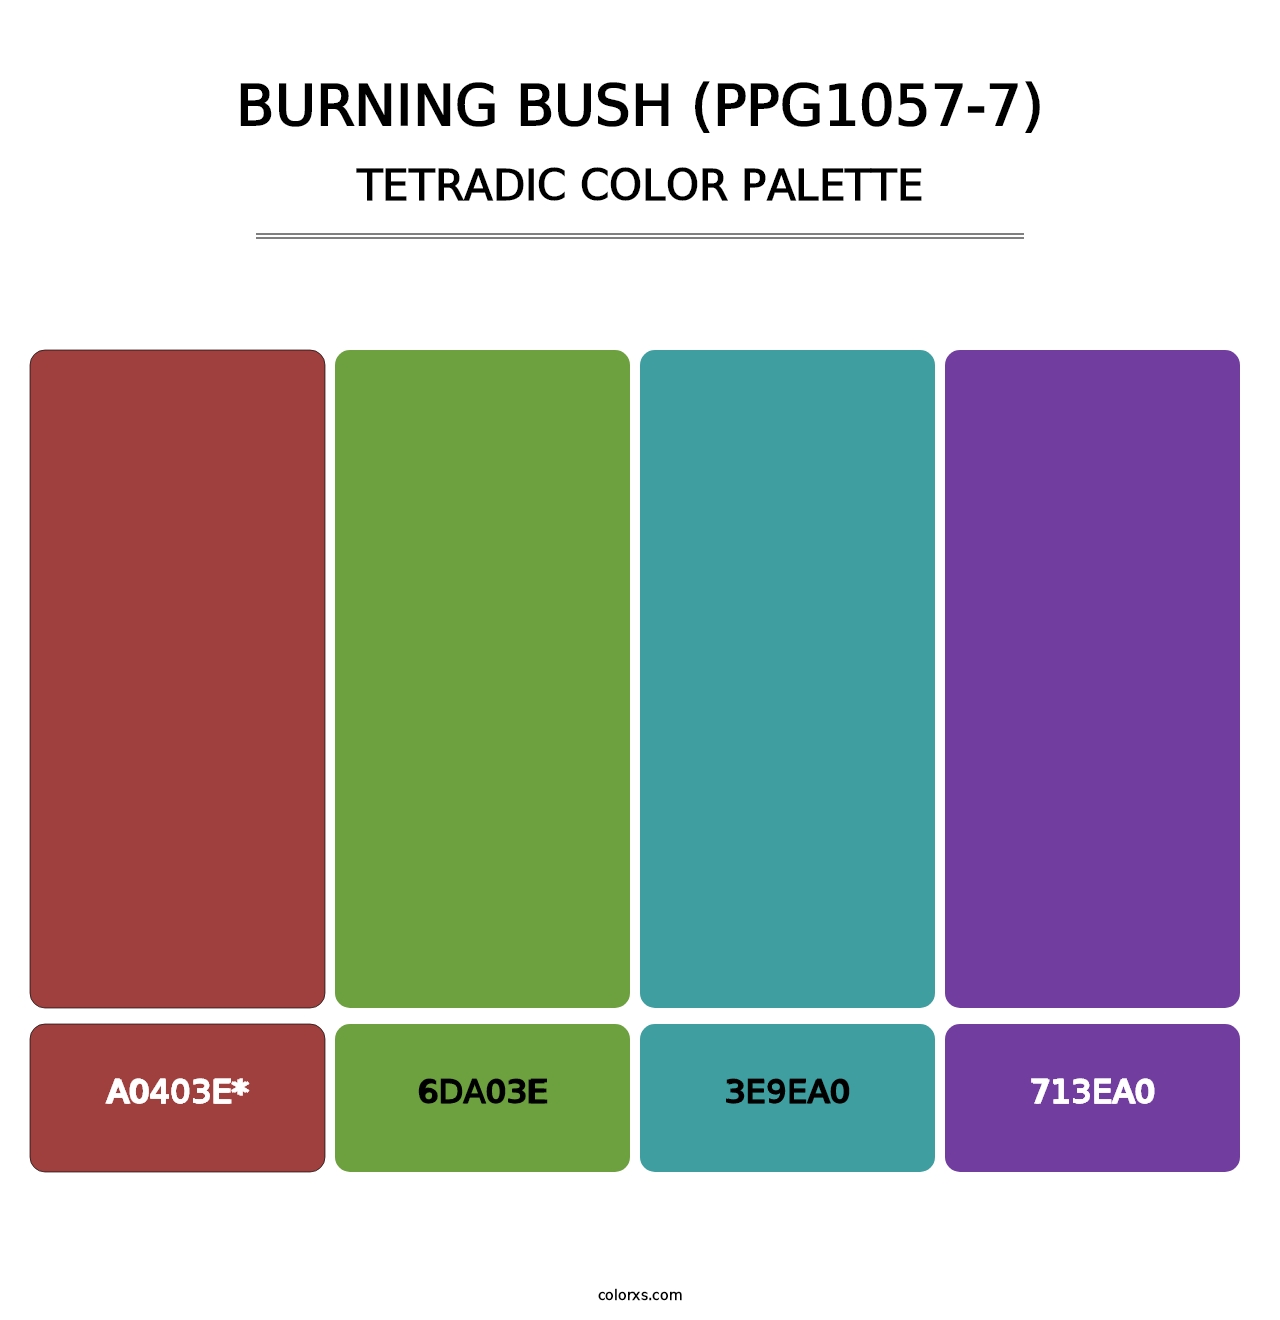 Burning Bush (PPG1057-7) - Tetradic Color Palette